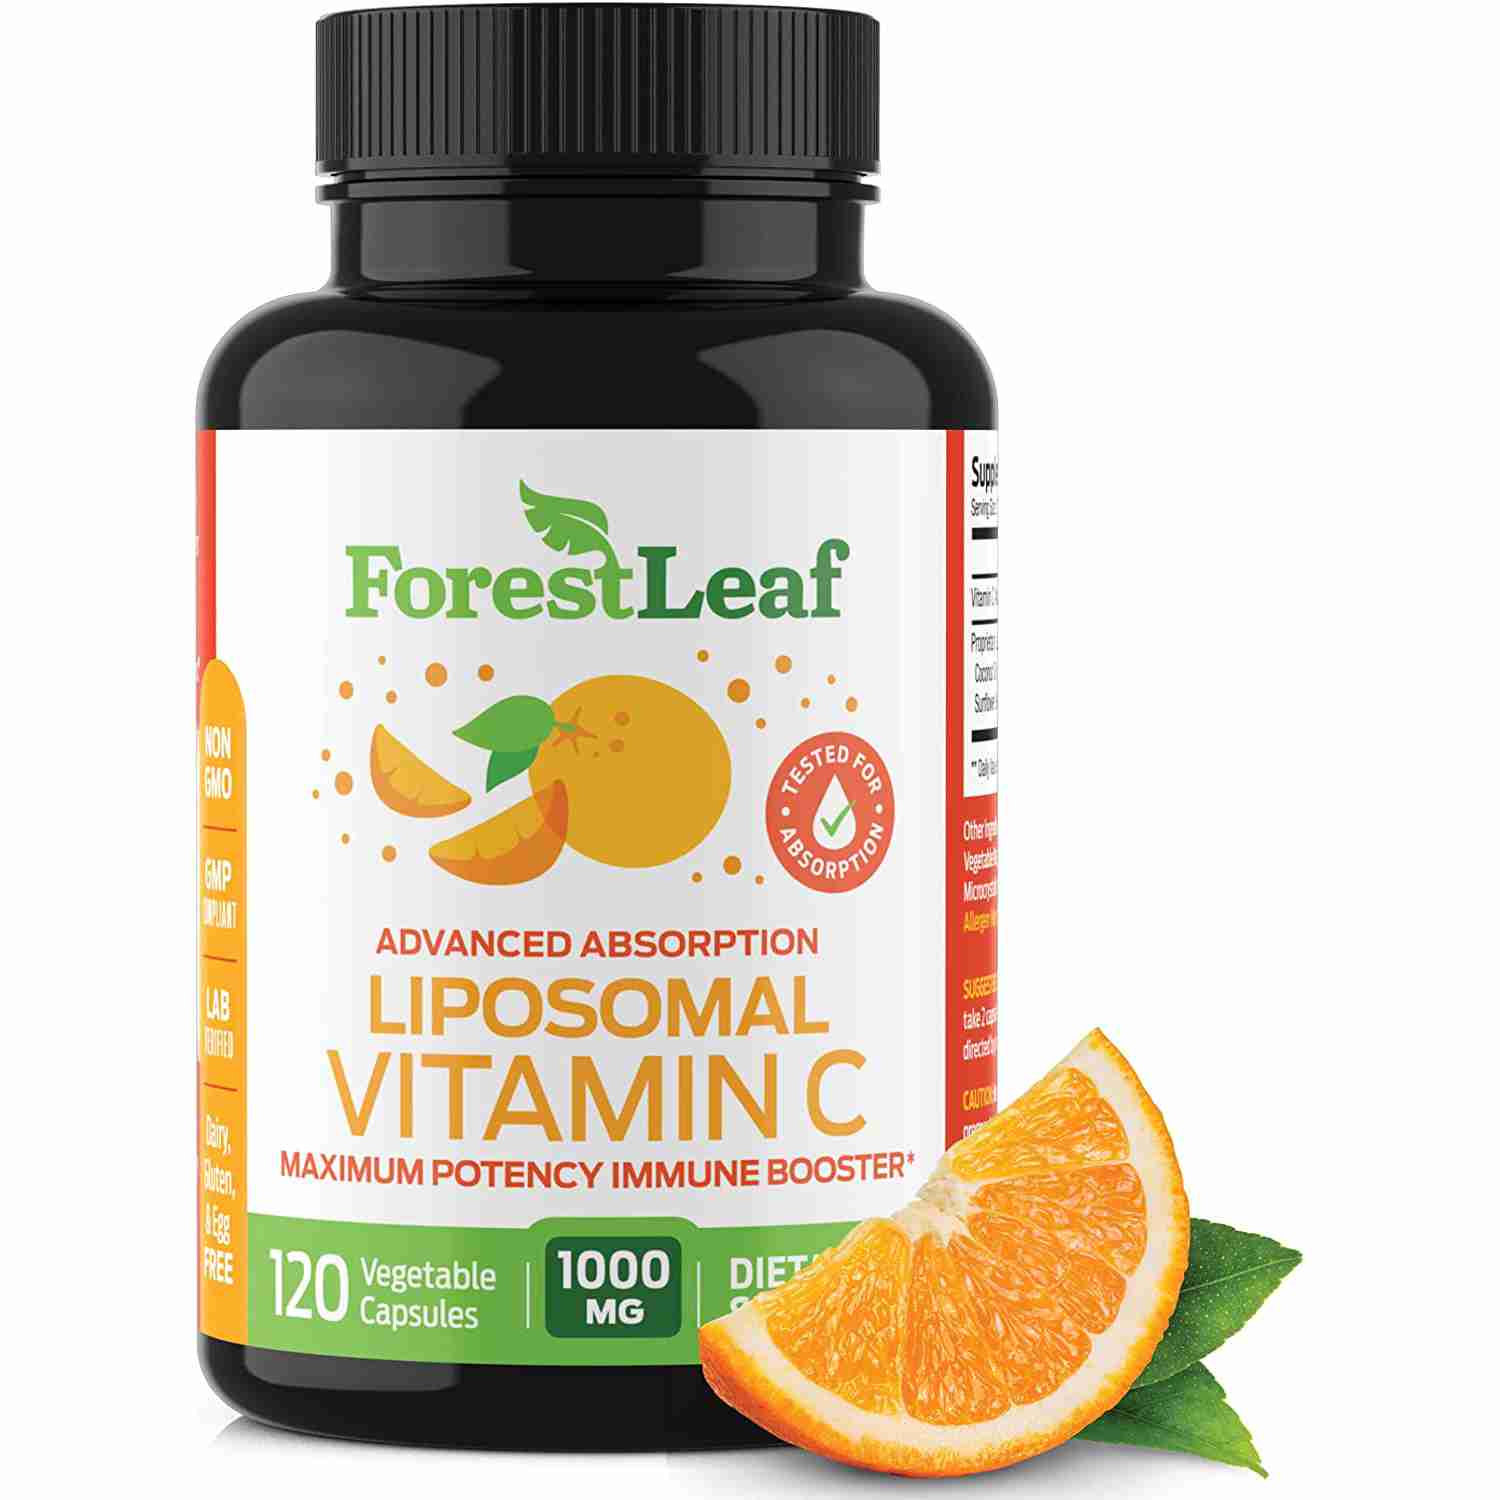 liposomal-vitamin-c with cash back rebate